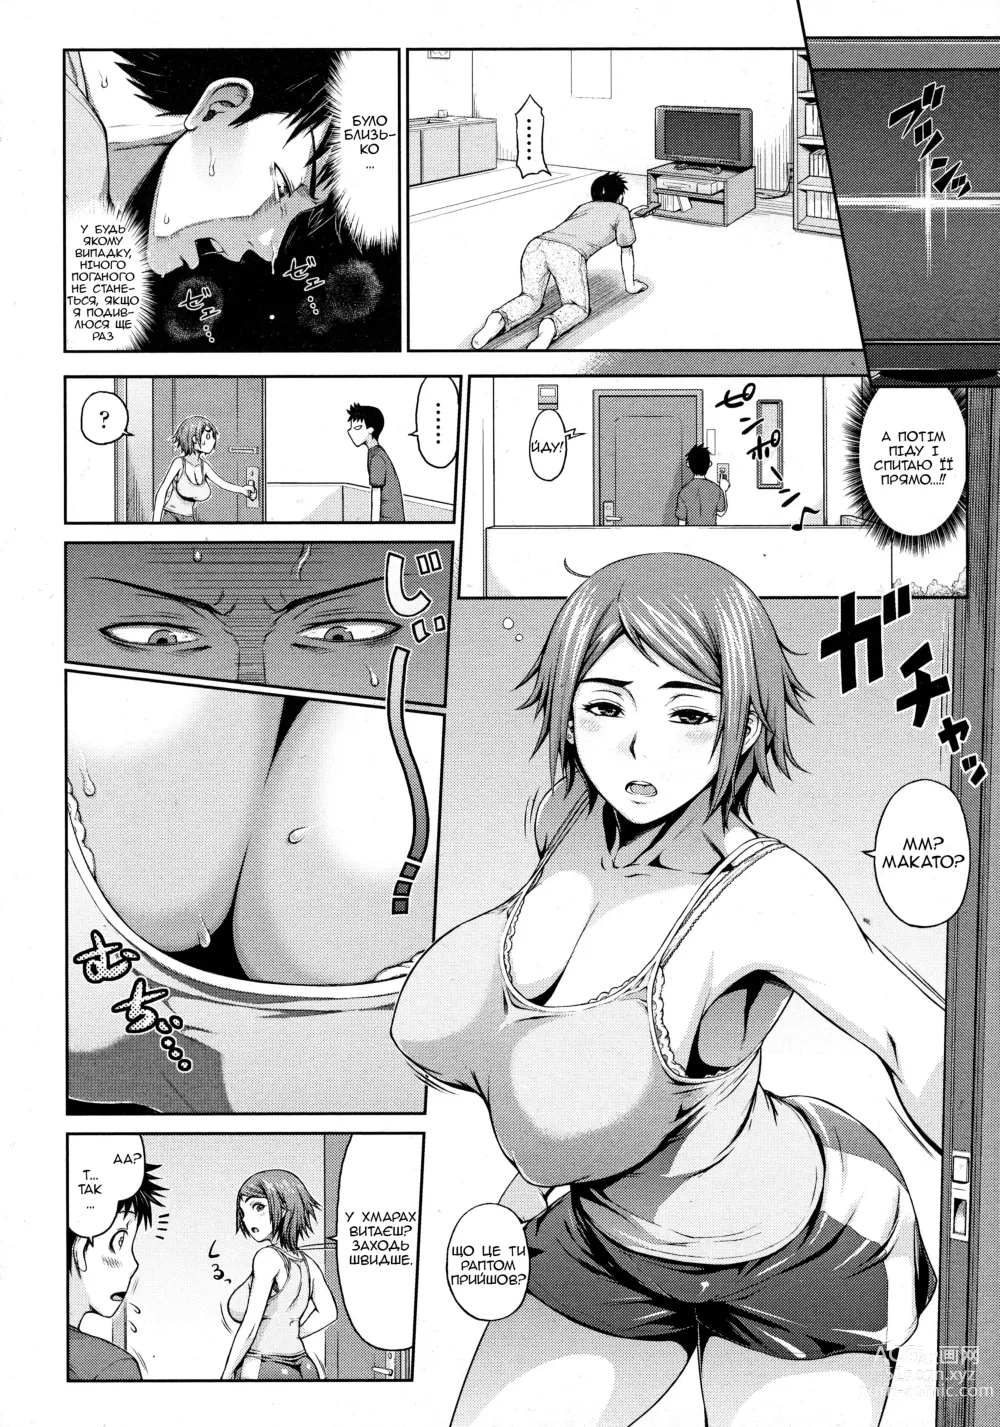 Page 6 of manga Відео сестрички